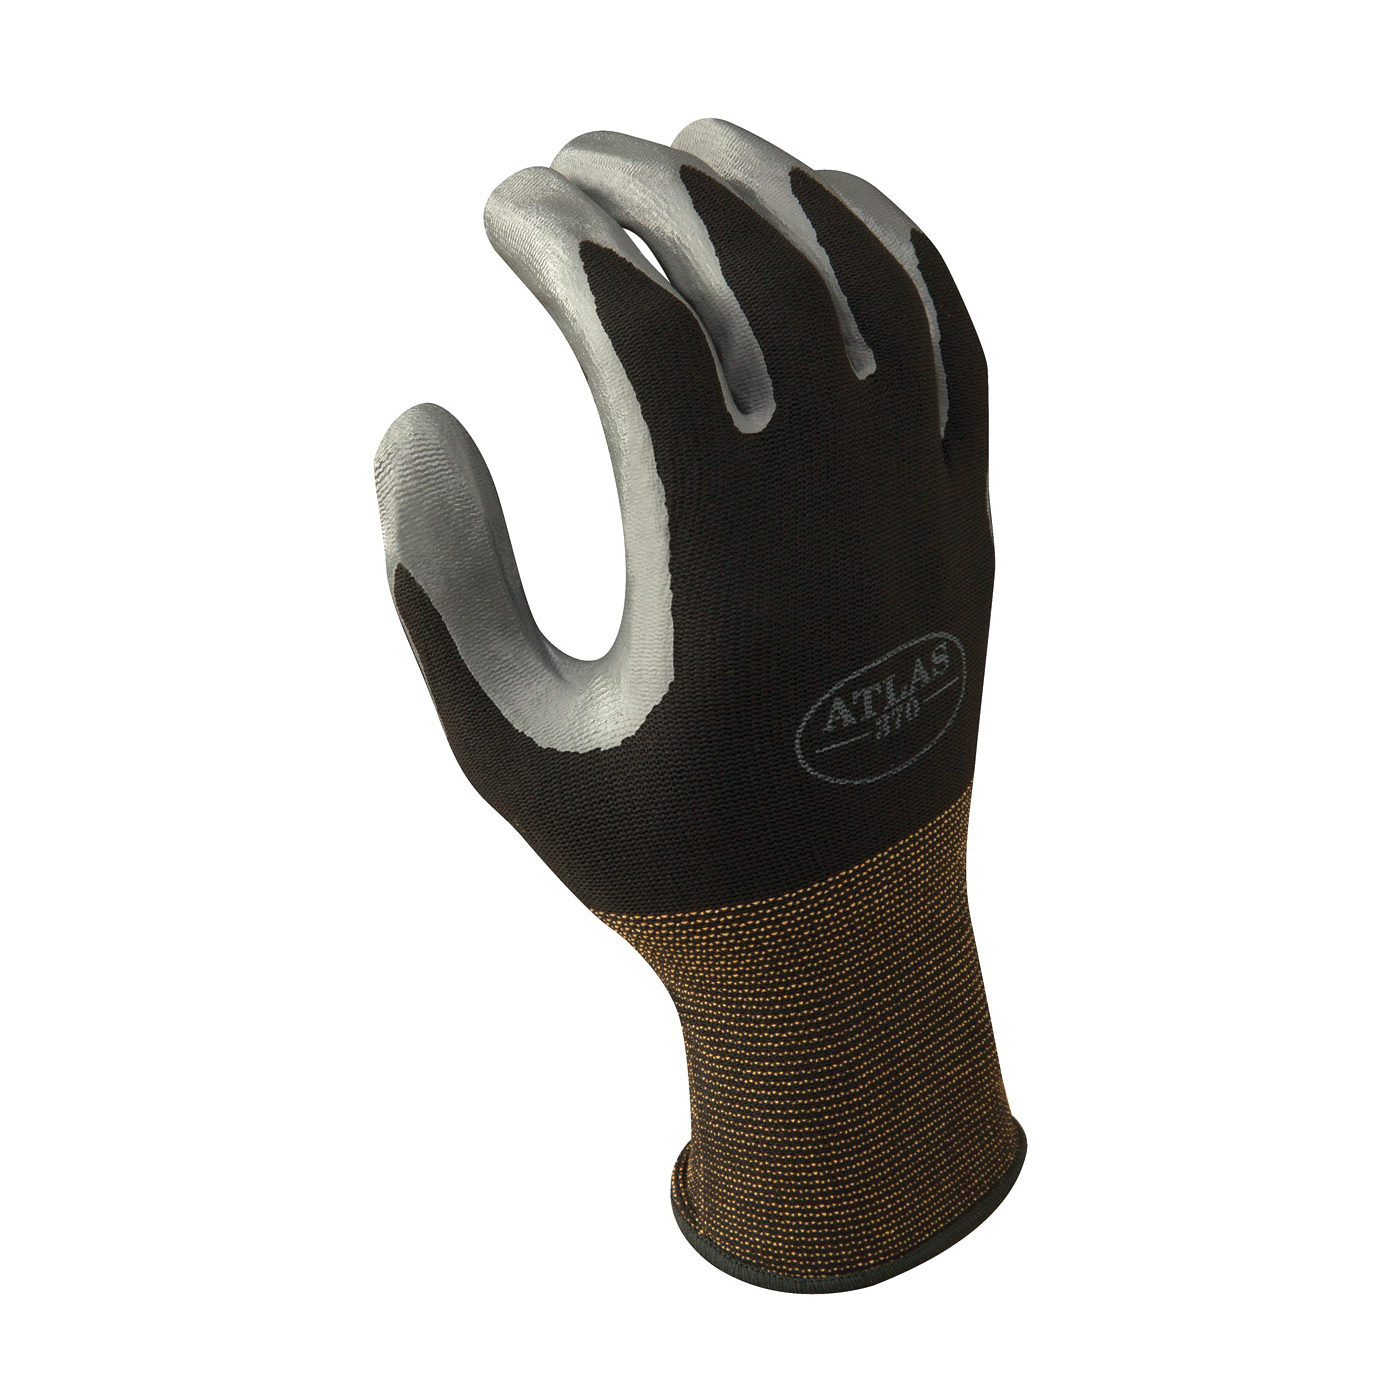 370BL-08.RT High-Flexibility Protective Gloves, L, Knit Wrist Cuff, Nitrile Glove, Black/Gray